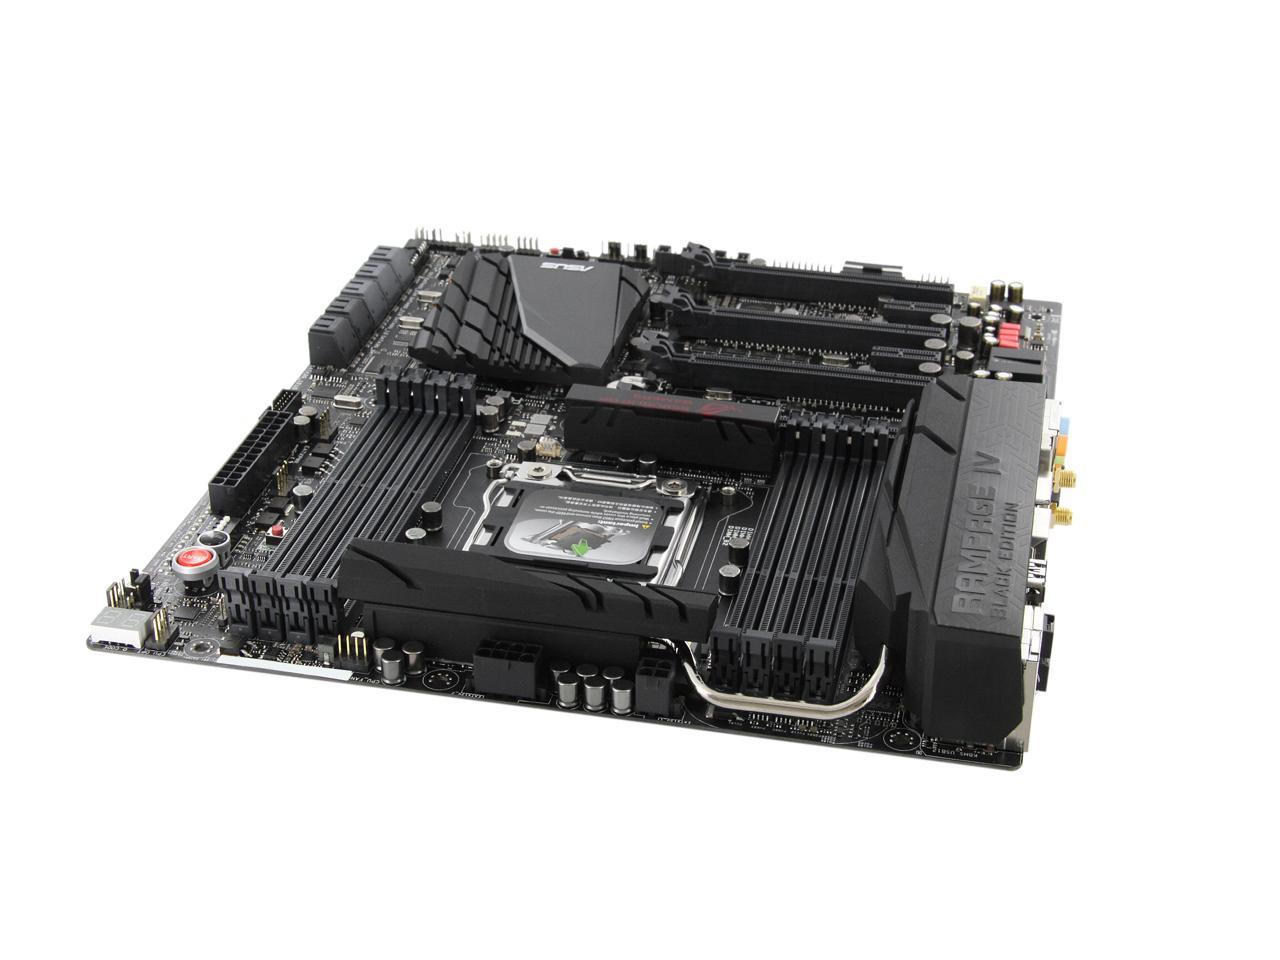 BIOS CHIP ASUS ROG RAMPAGE IV BLACK EDITION 0801 For Motherboard X79 LGA2011 New 